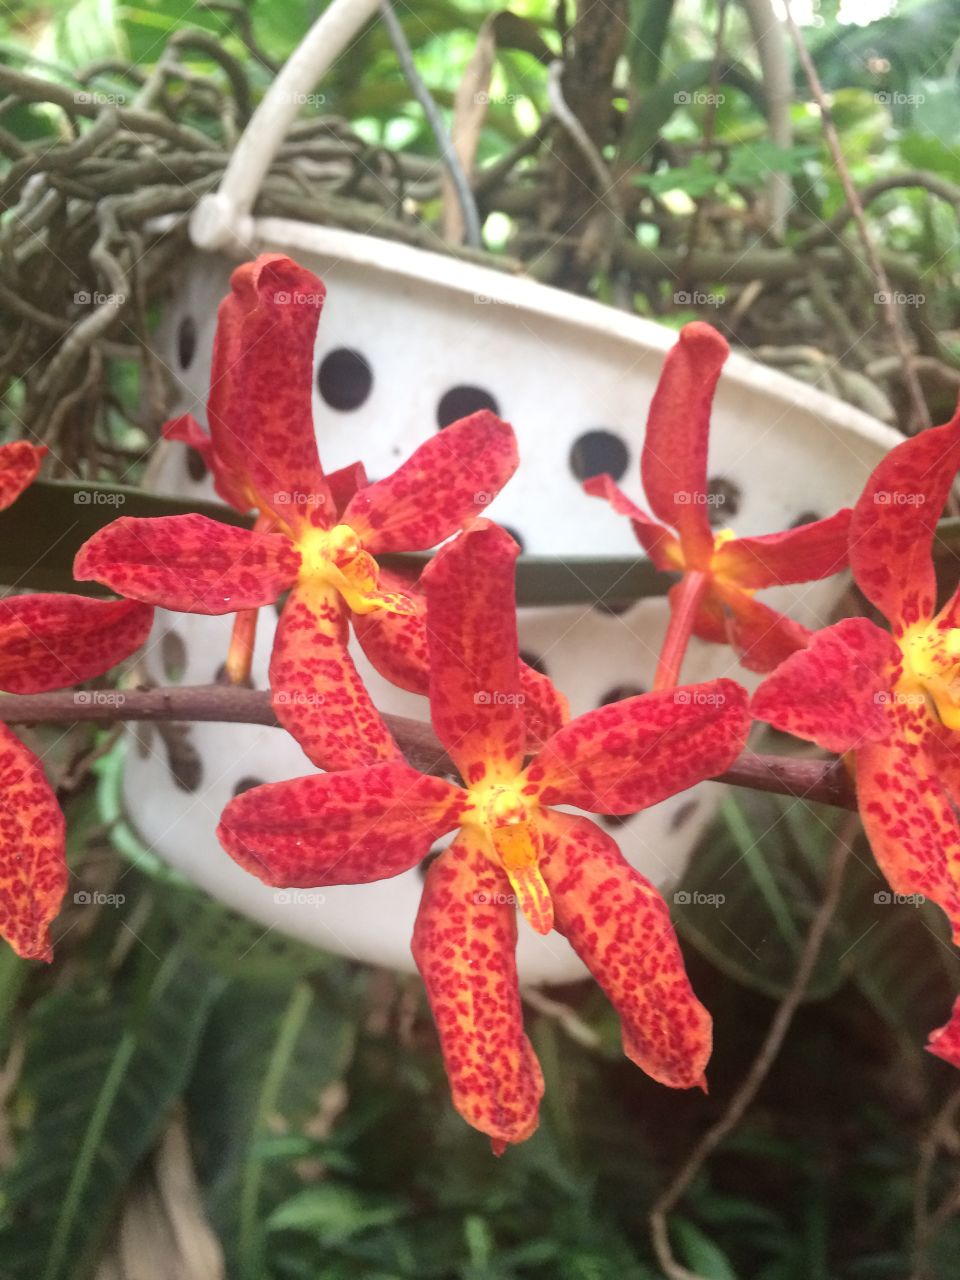 My orchid, São Paulo, Brazil